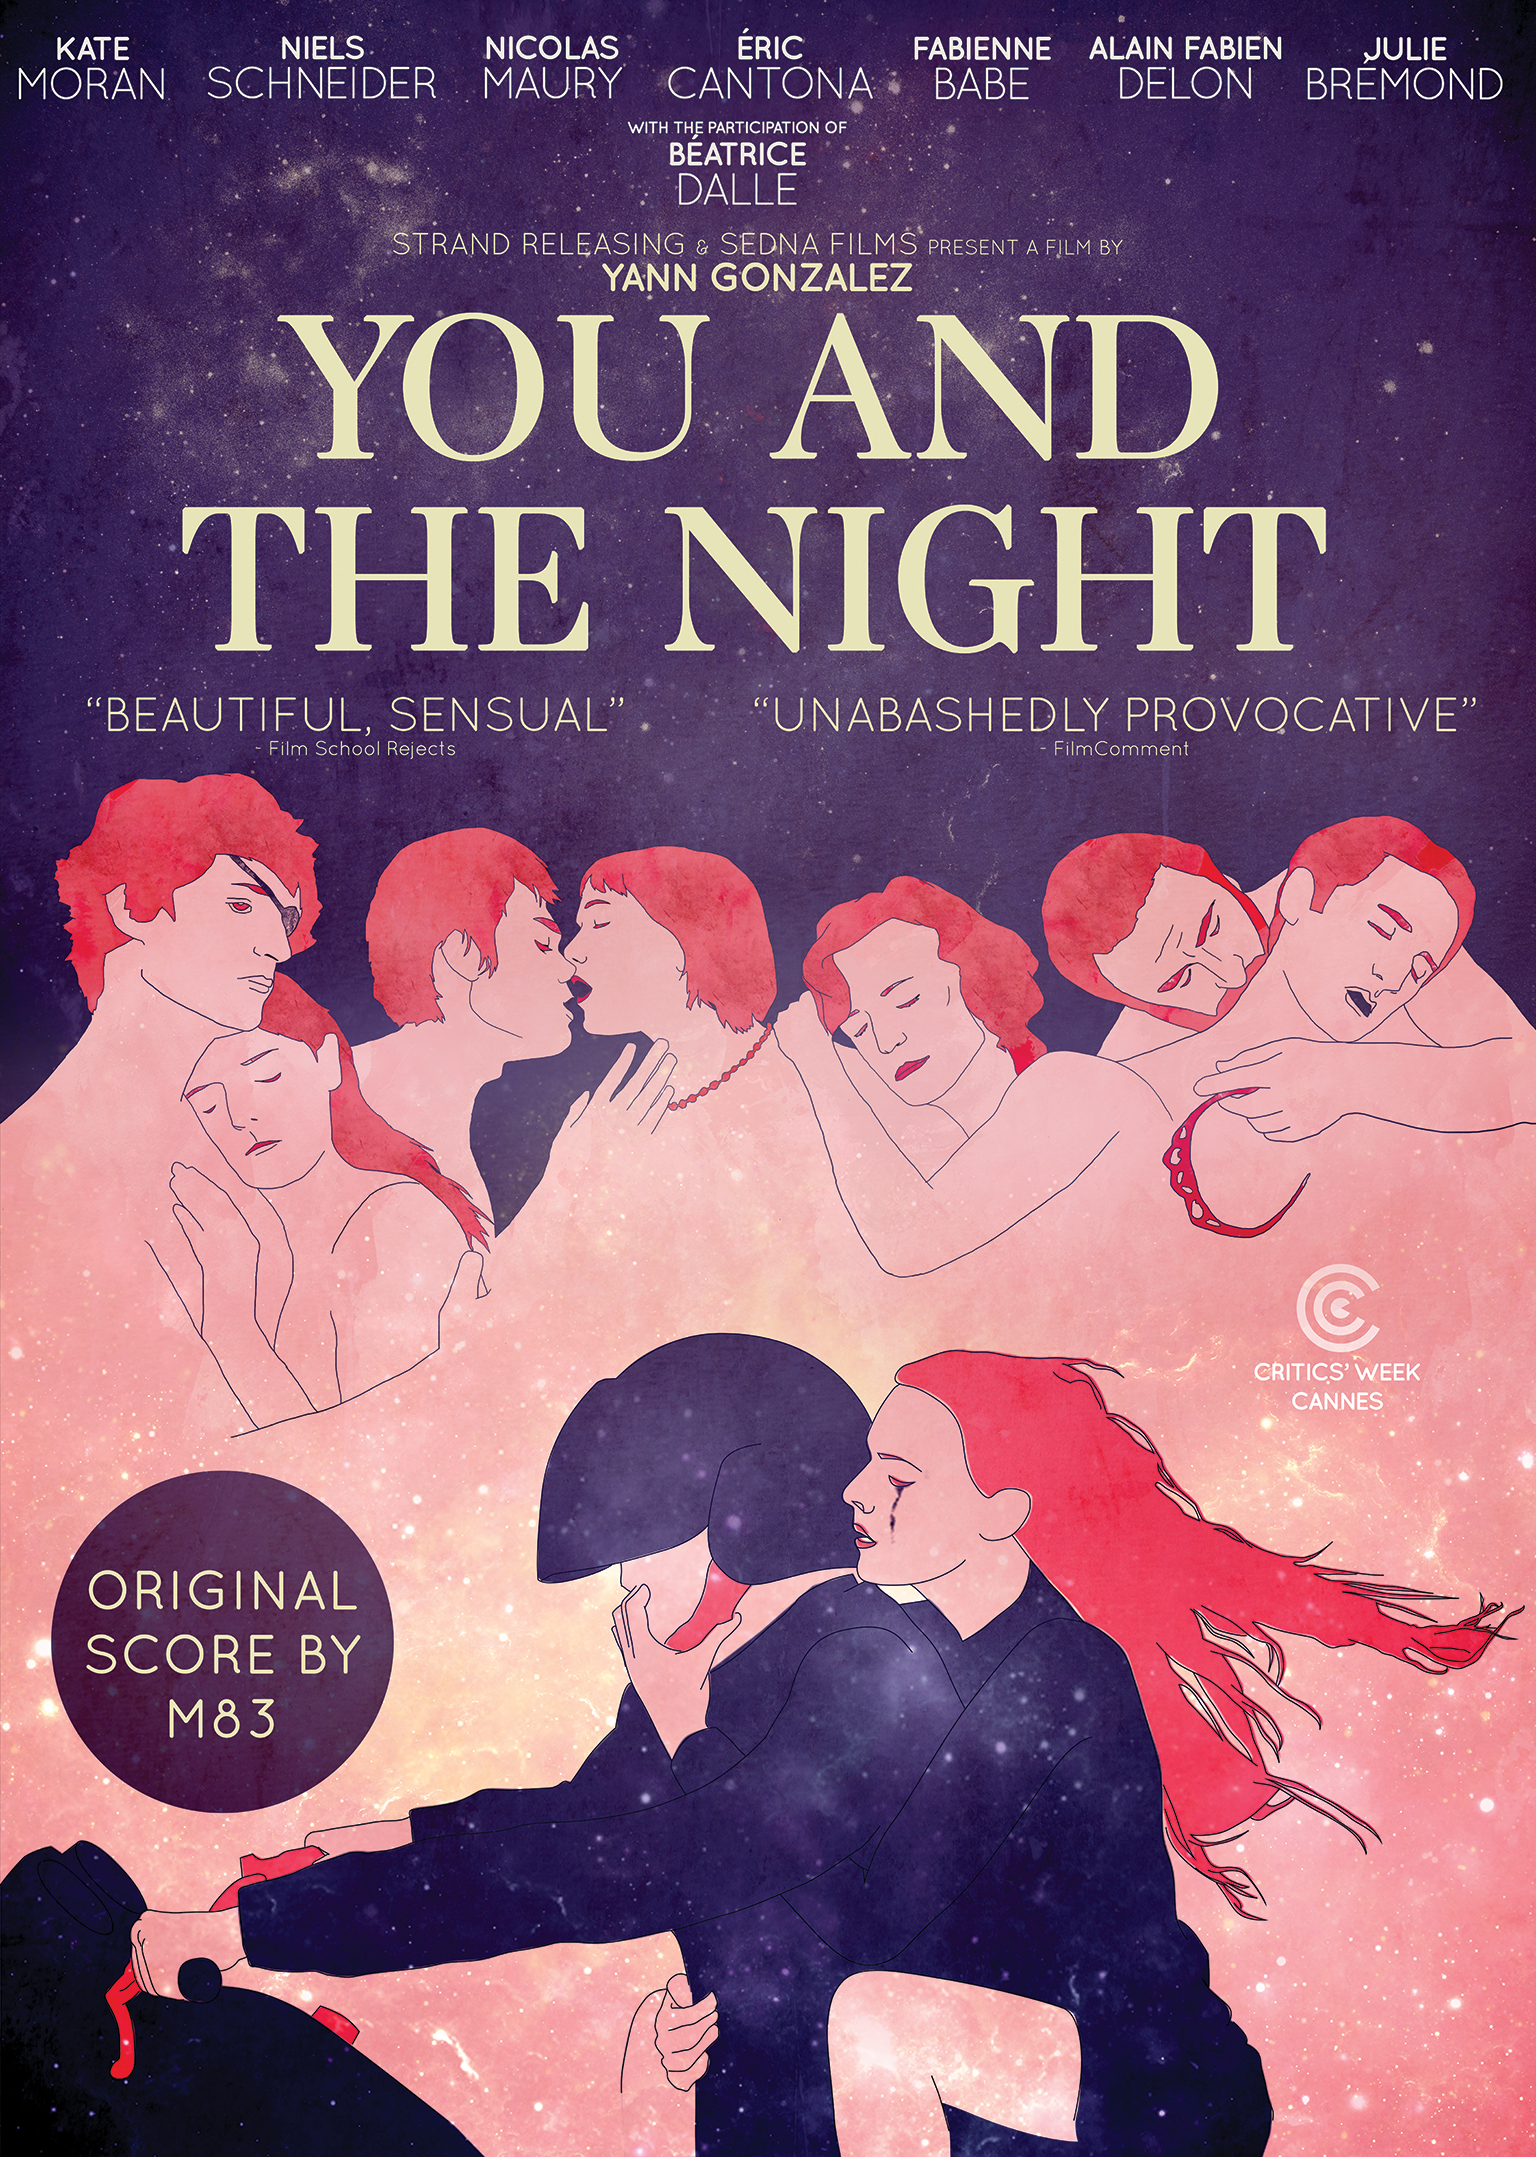 You and the Night (2013) Screenshot 1